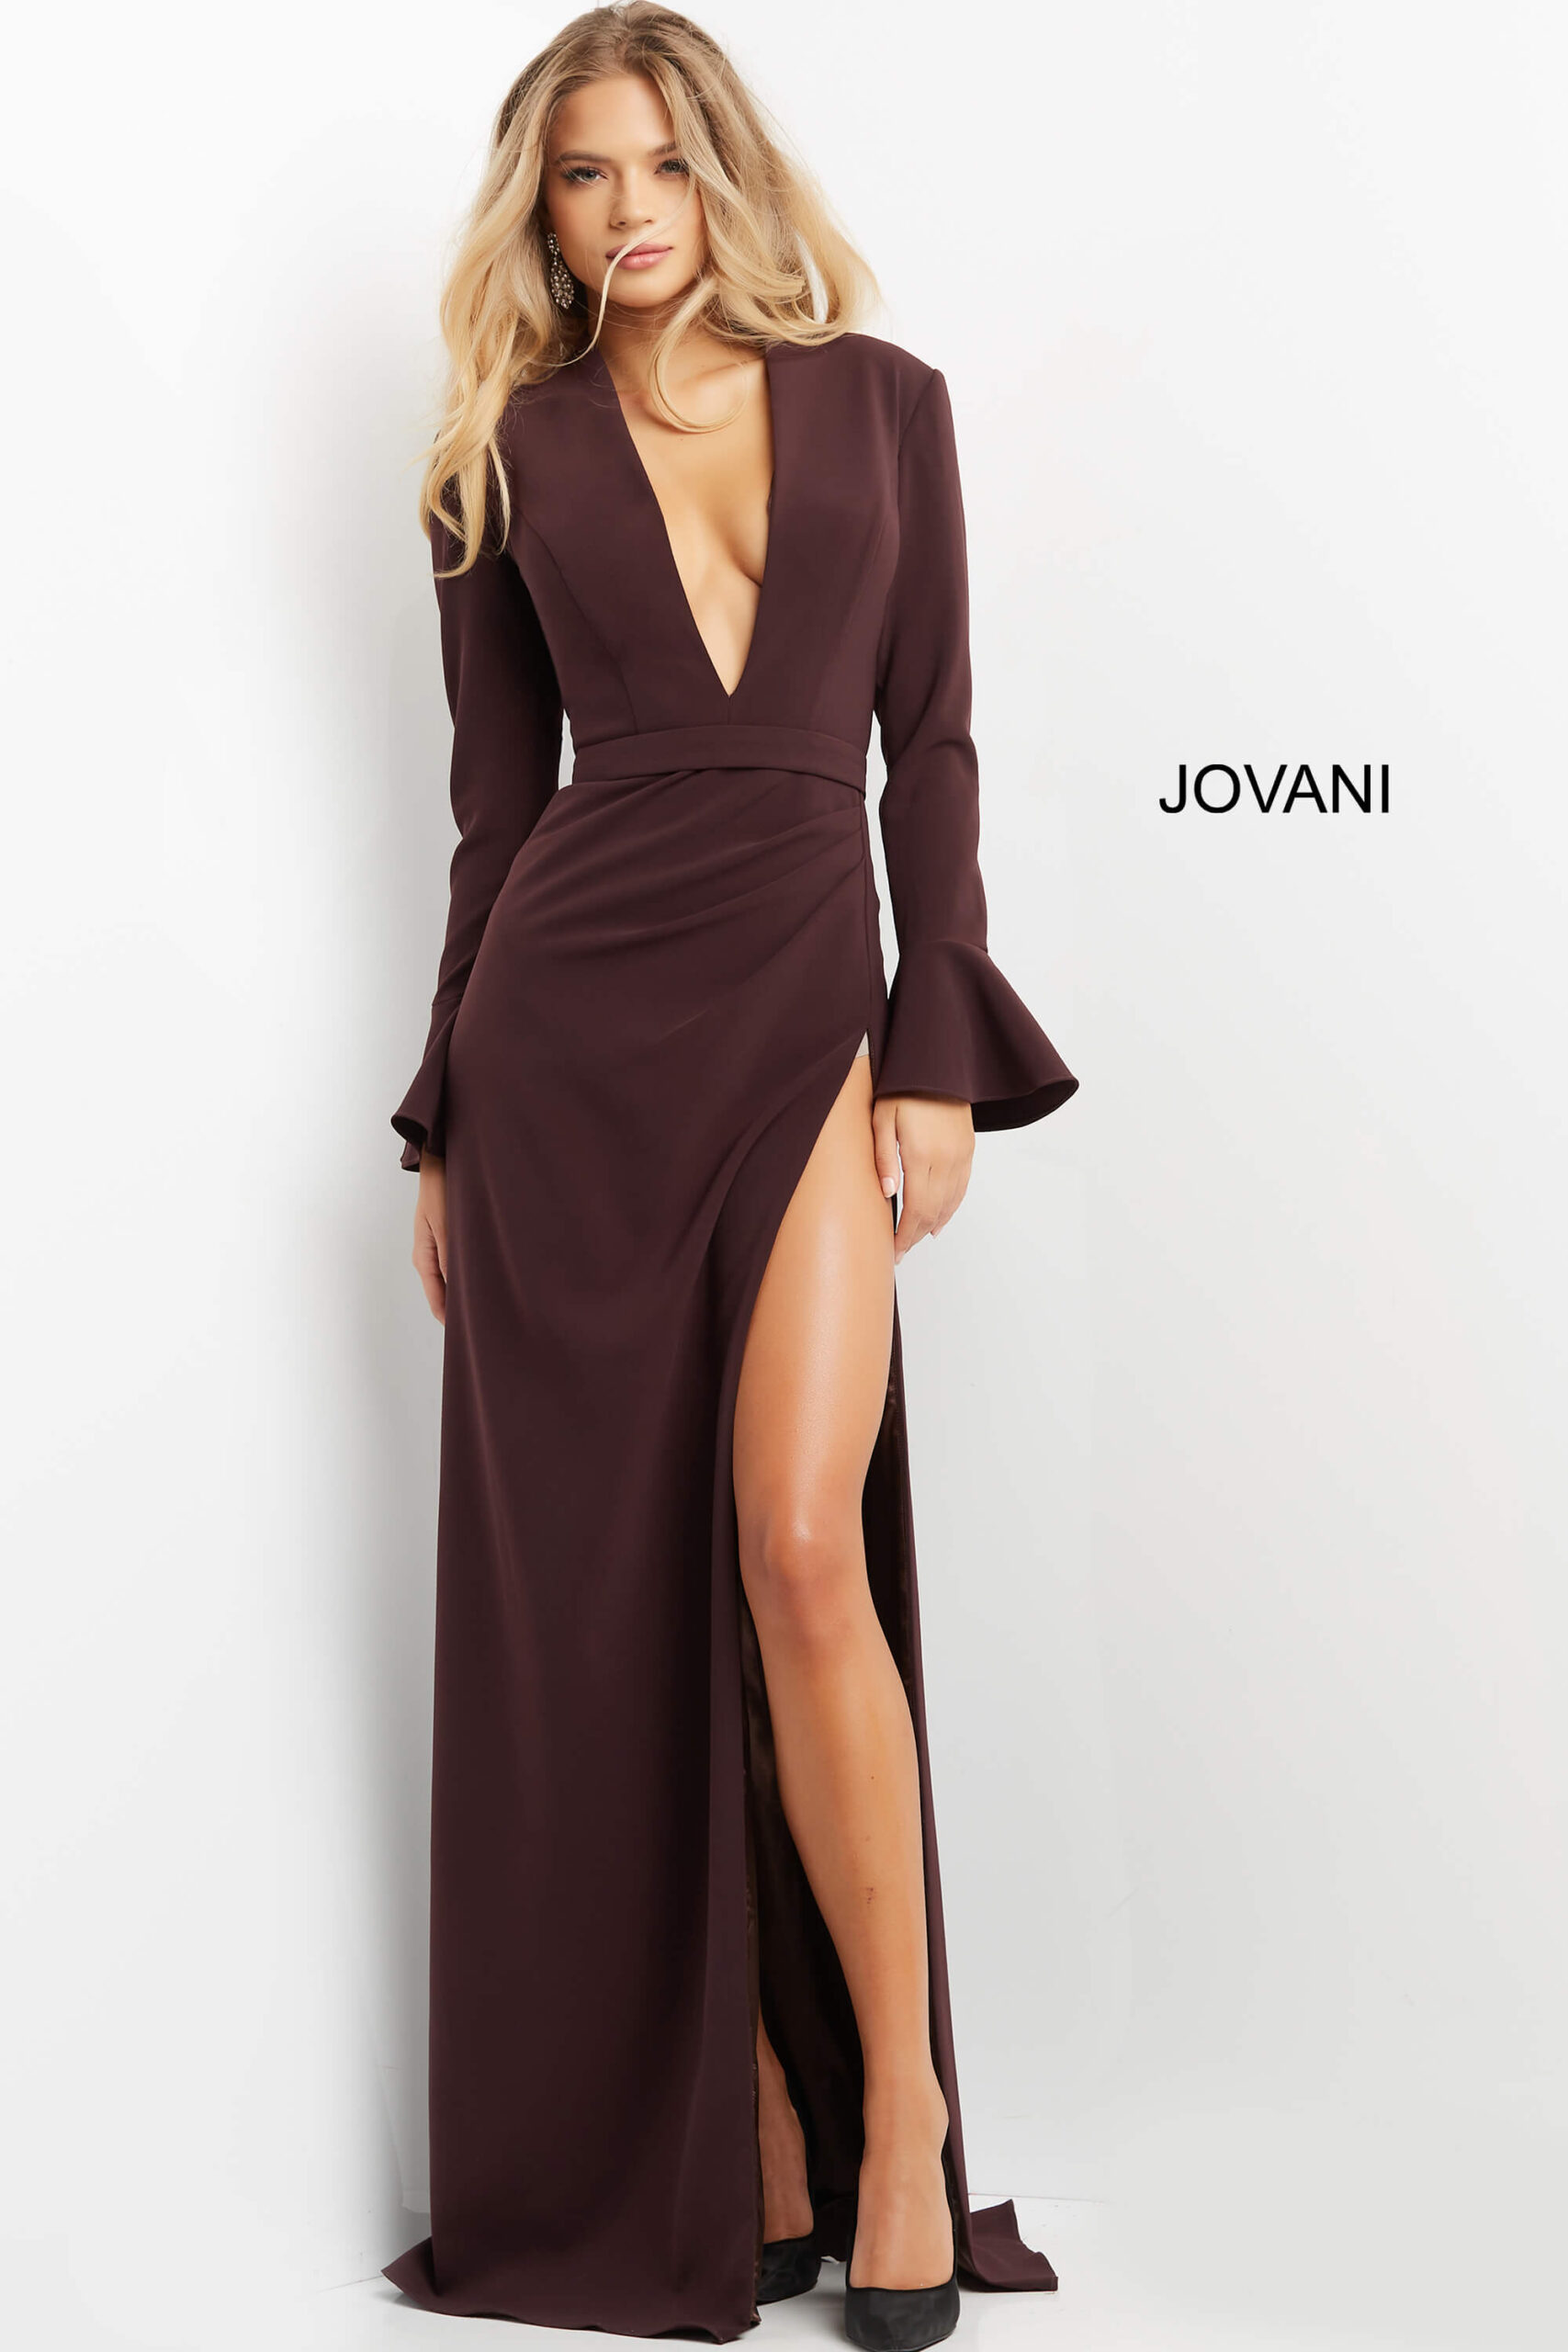 Jovani 04965 Plum Plunging Neck Sheath Evening Gown